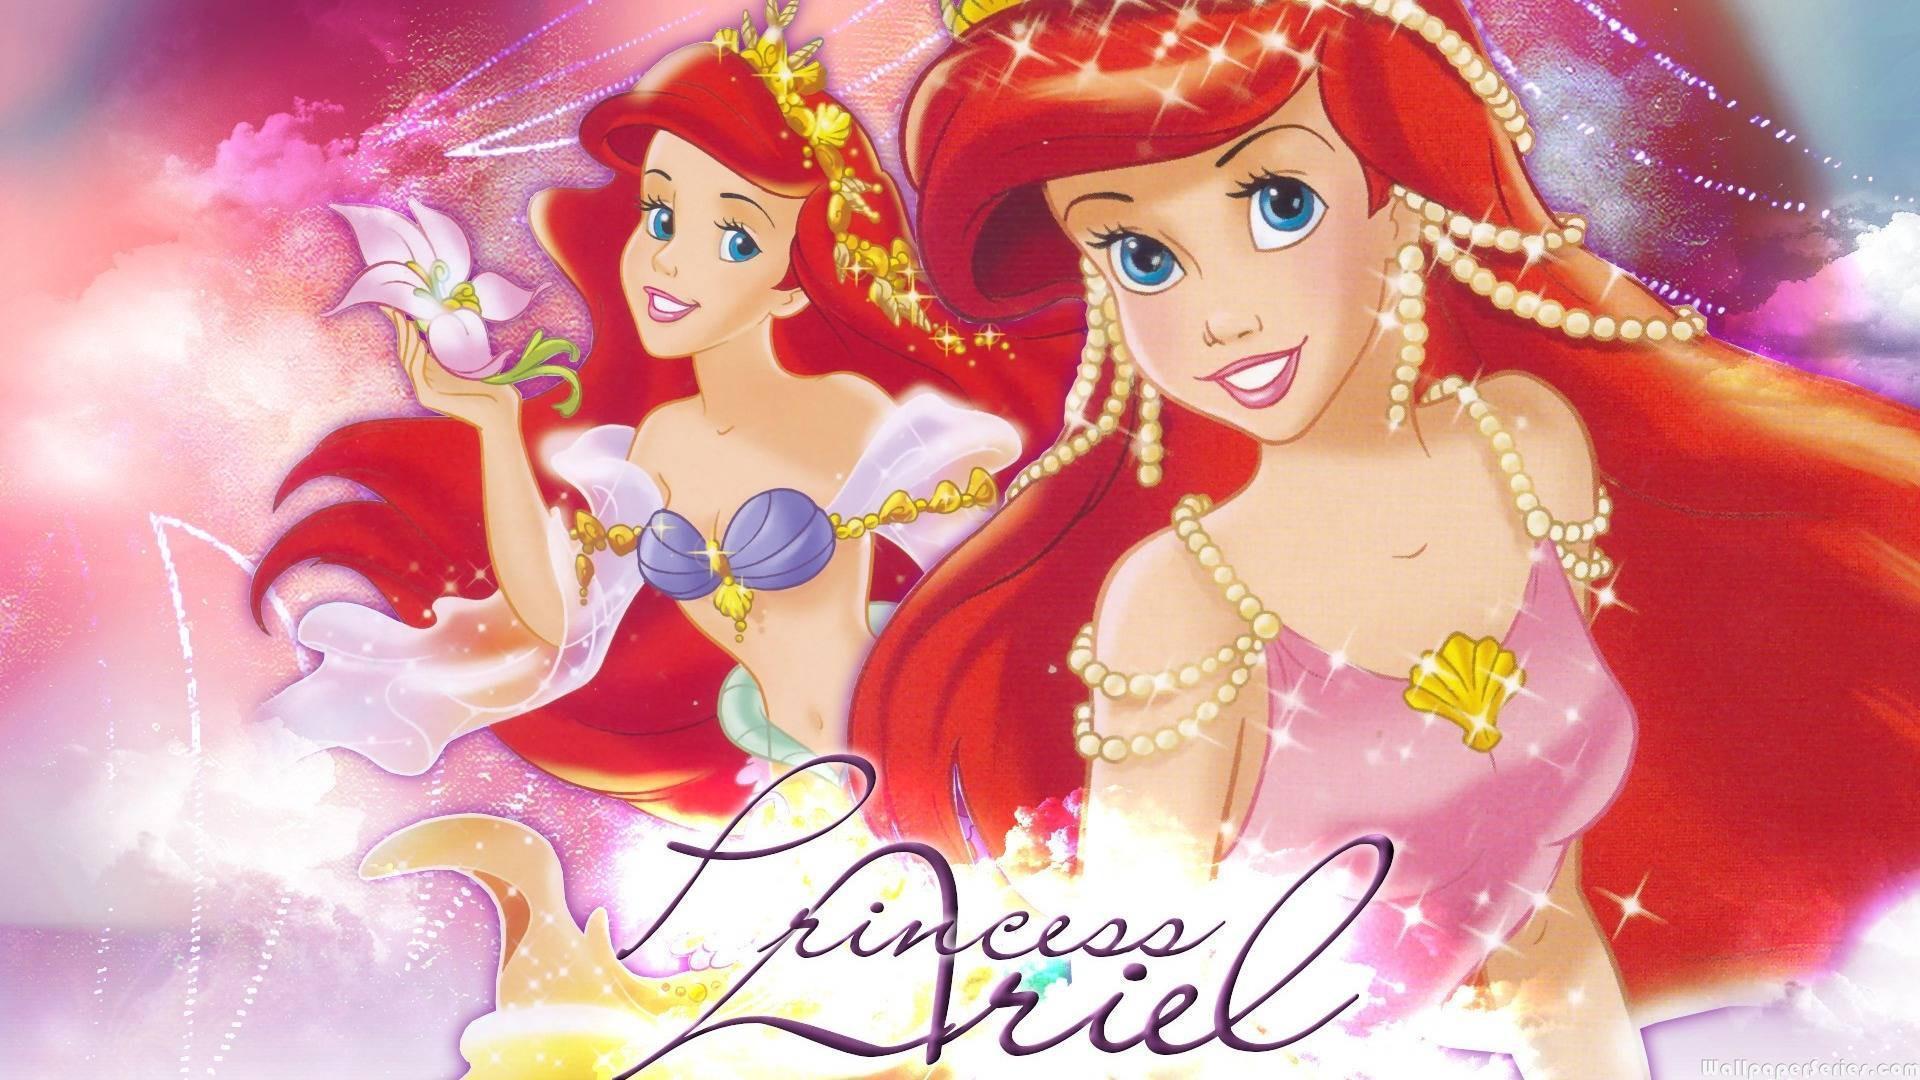 HD Disney Princess Ariel Pink Dress Latest Wallpaper. Download